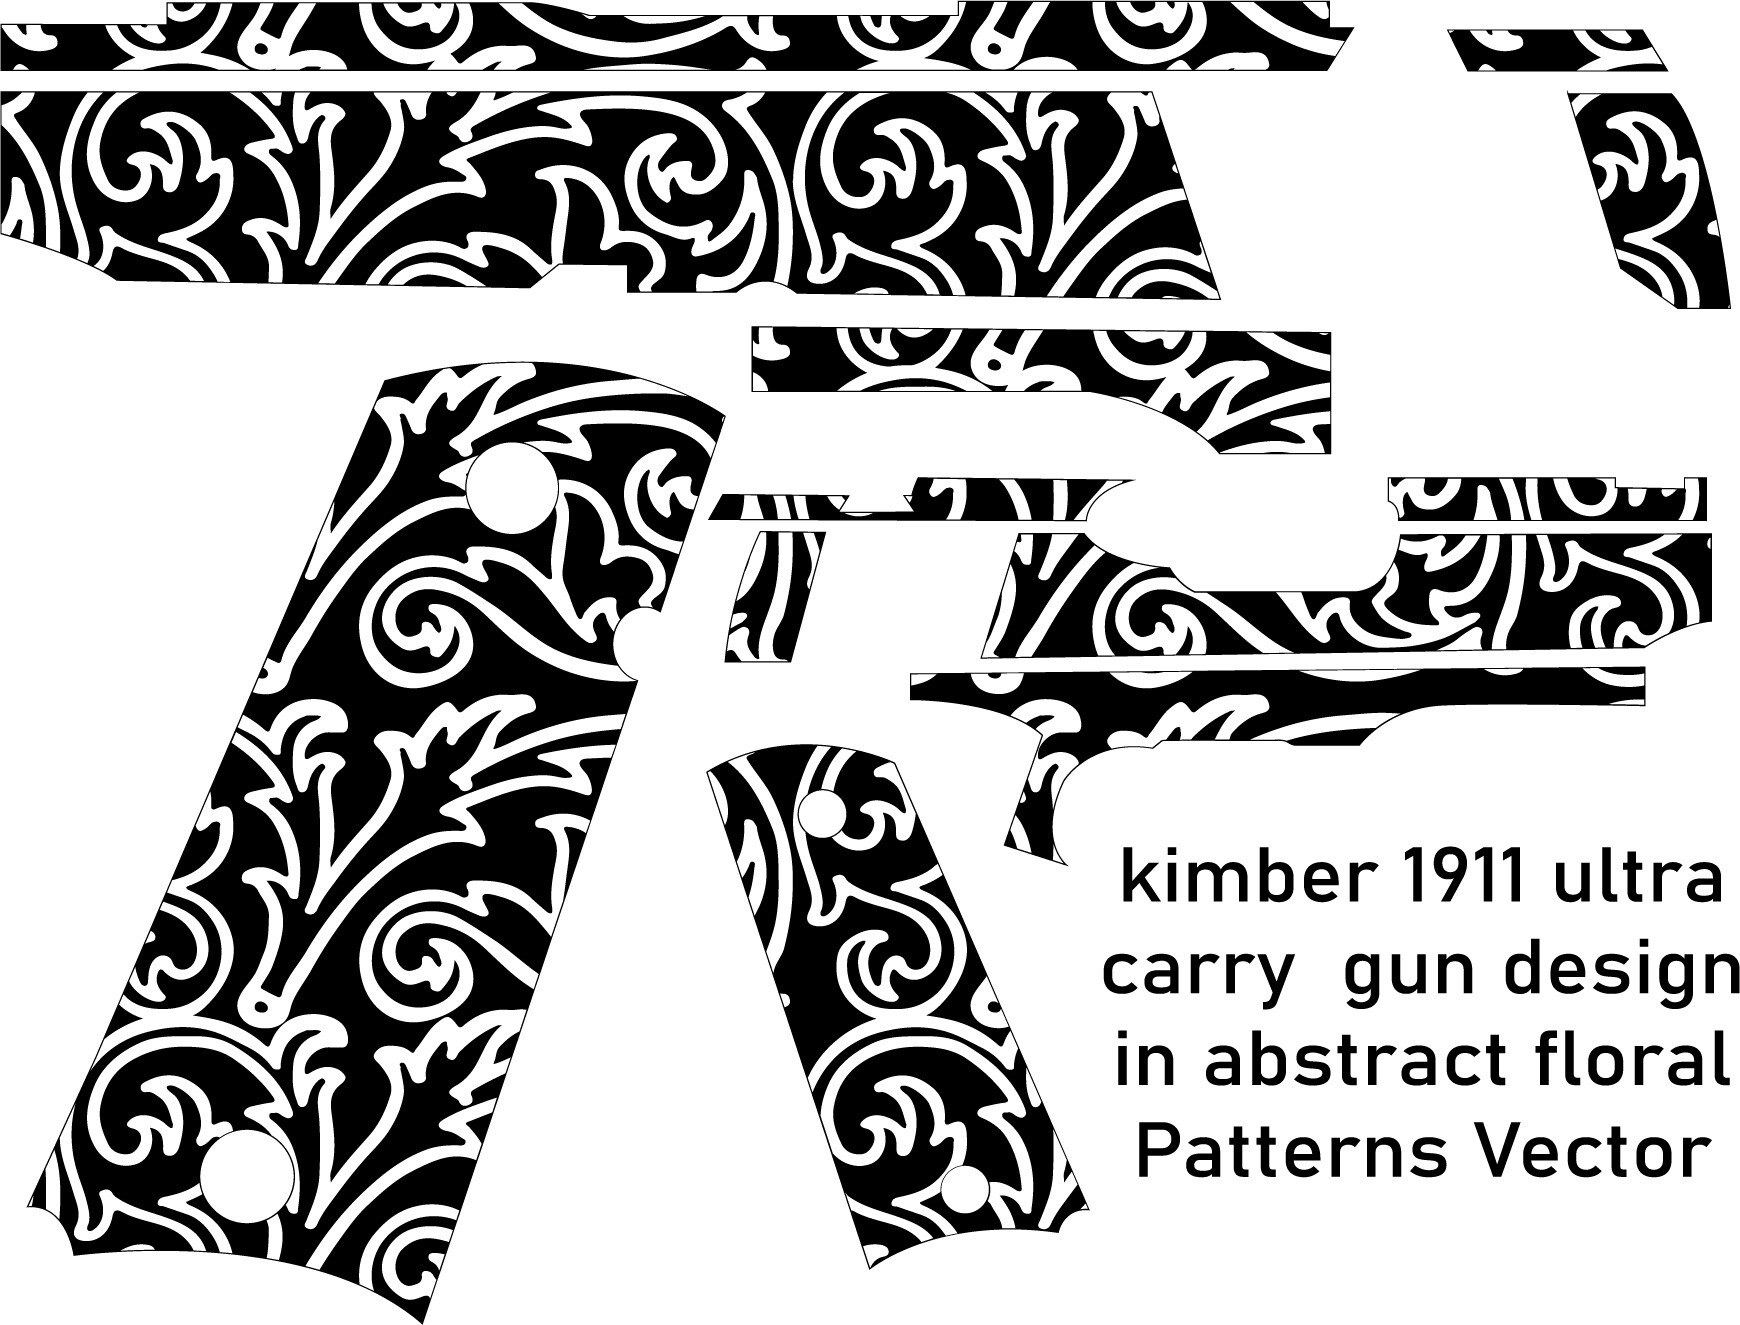 ArtStation - Kimber 1911 ultra carry 3 Hand Gun gun grips engraving ...